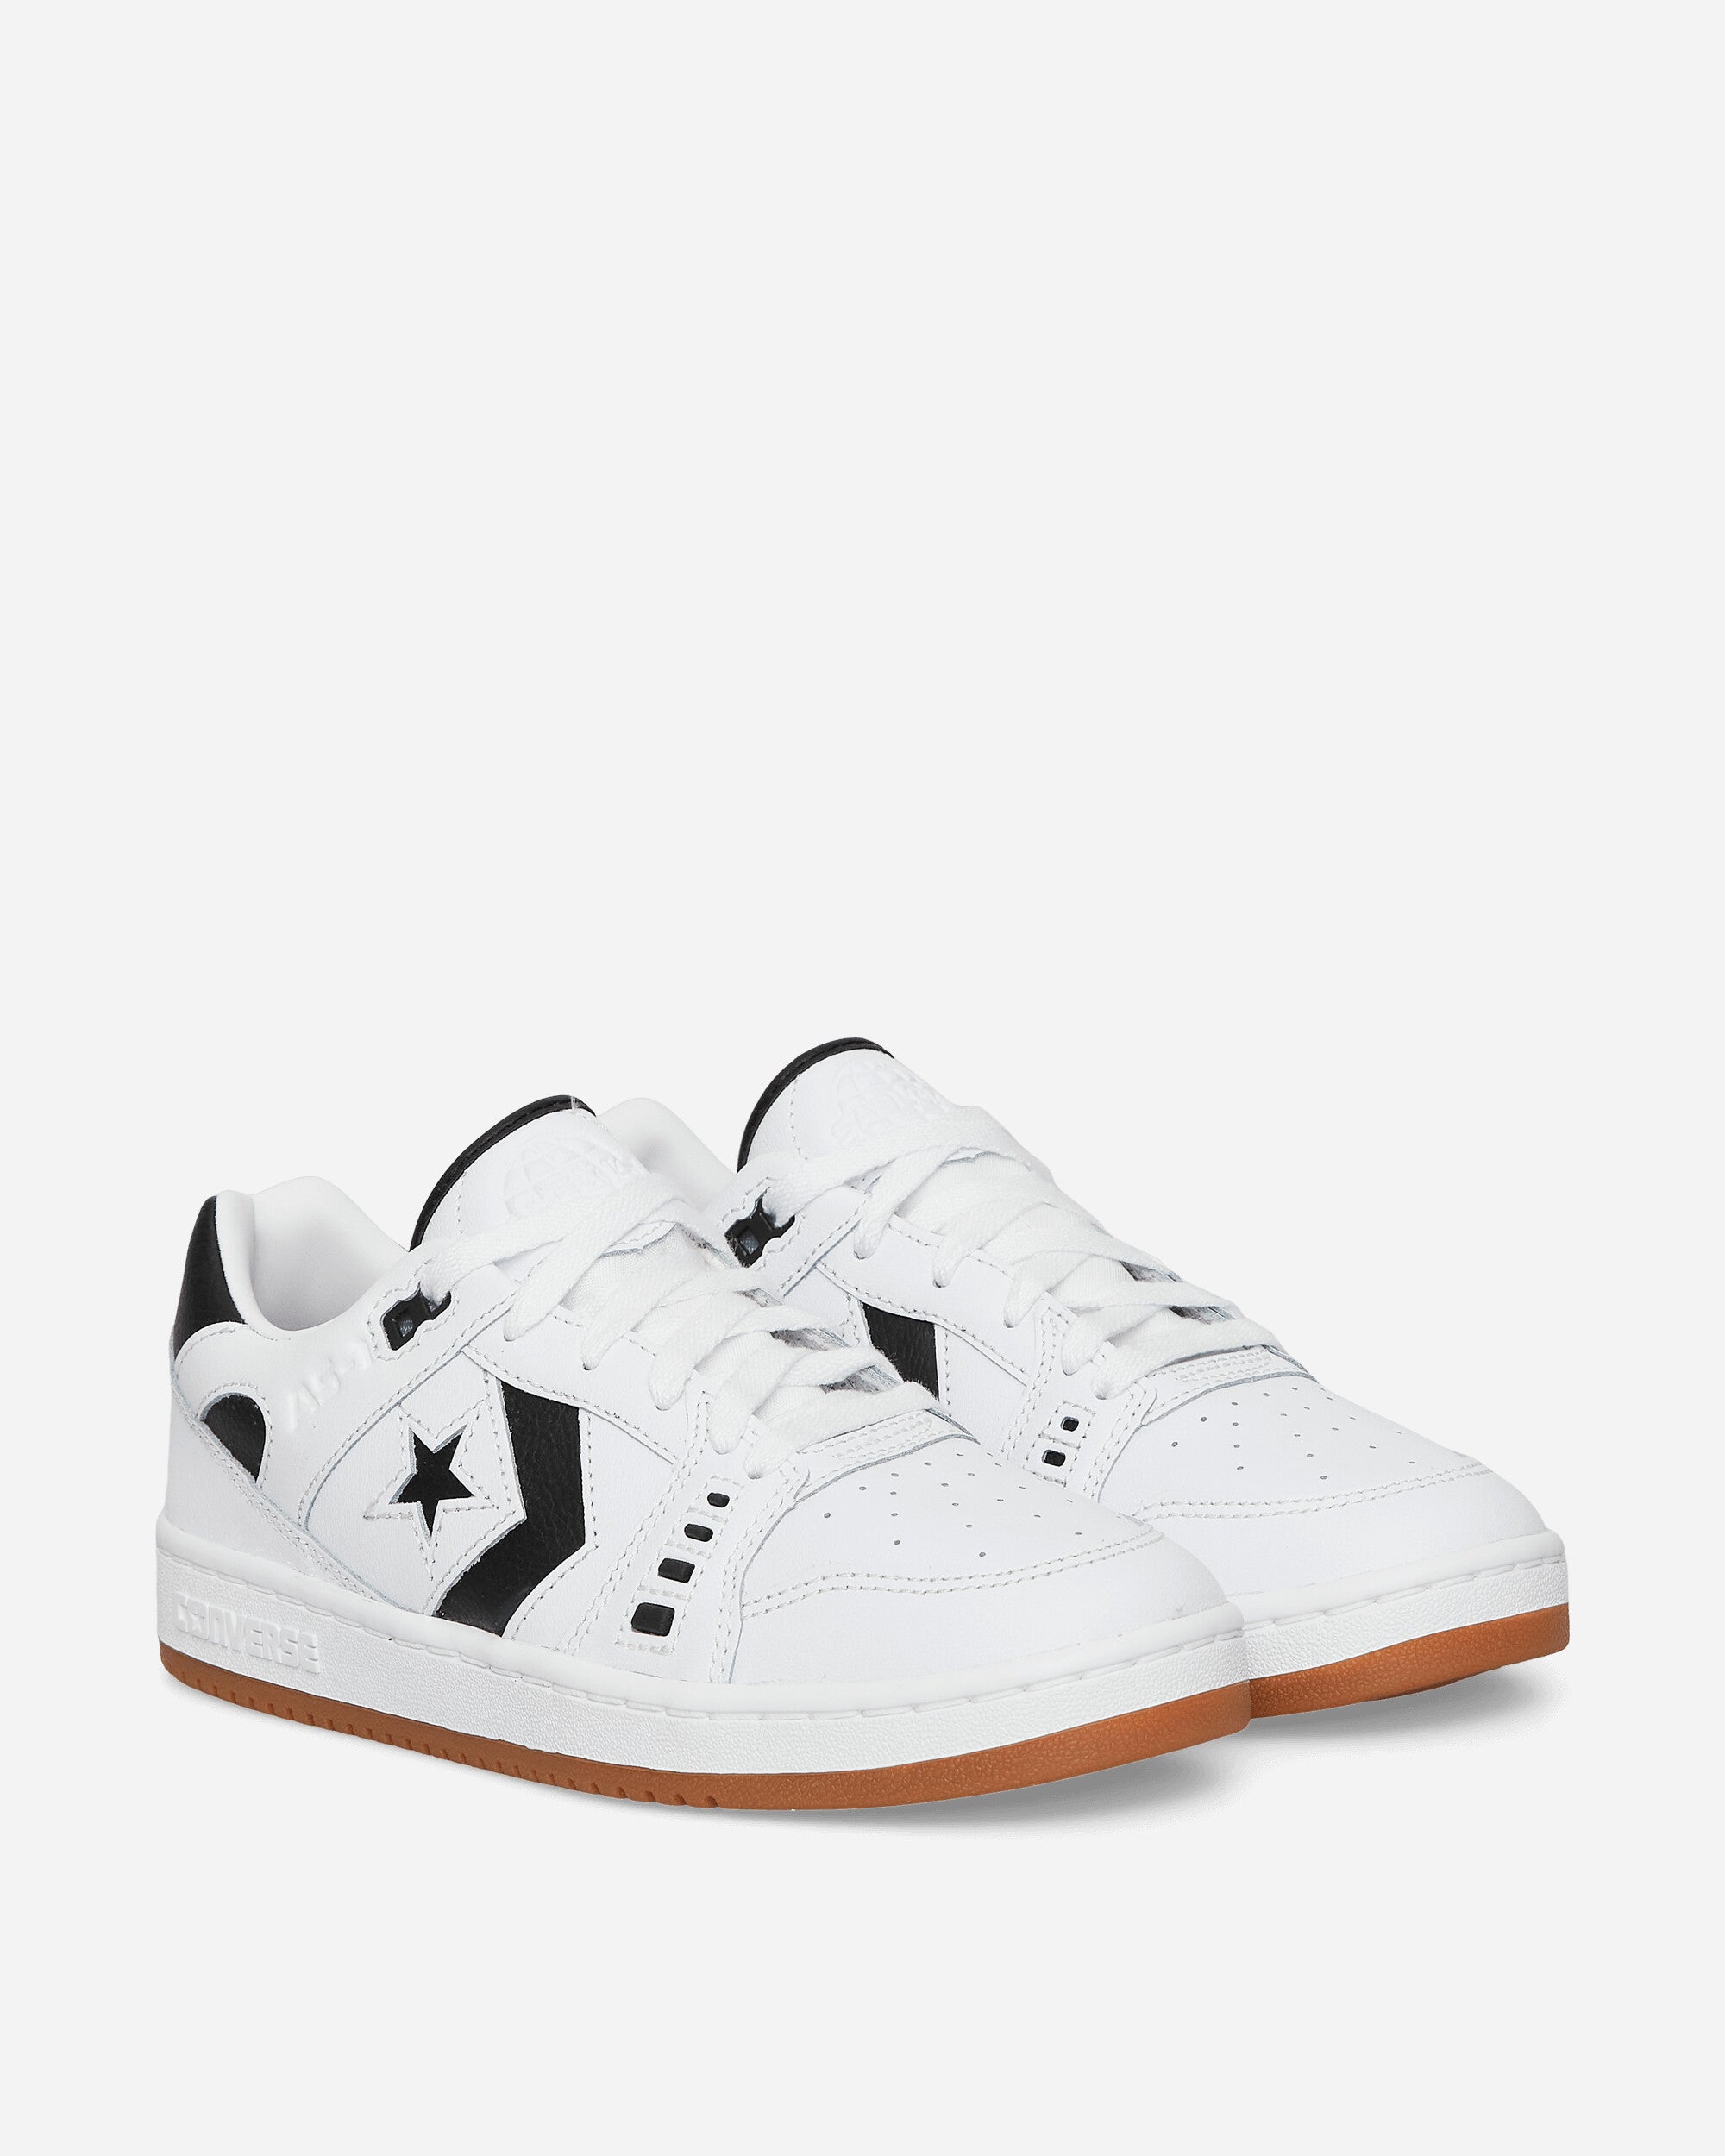 AS-1 Pro Sneakers White / Black